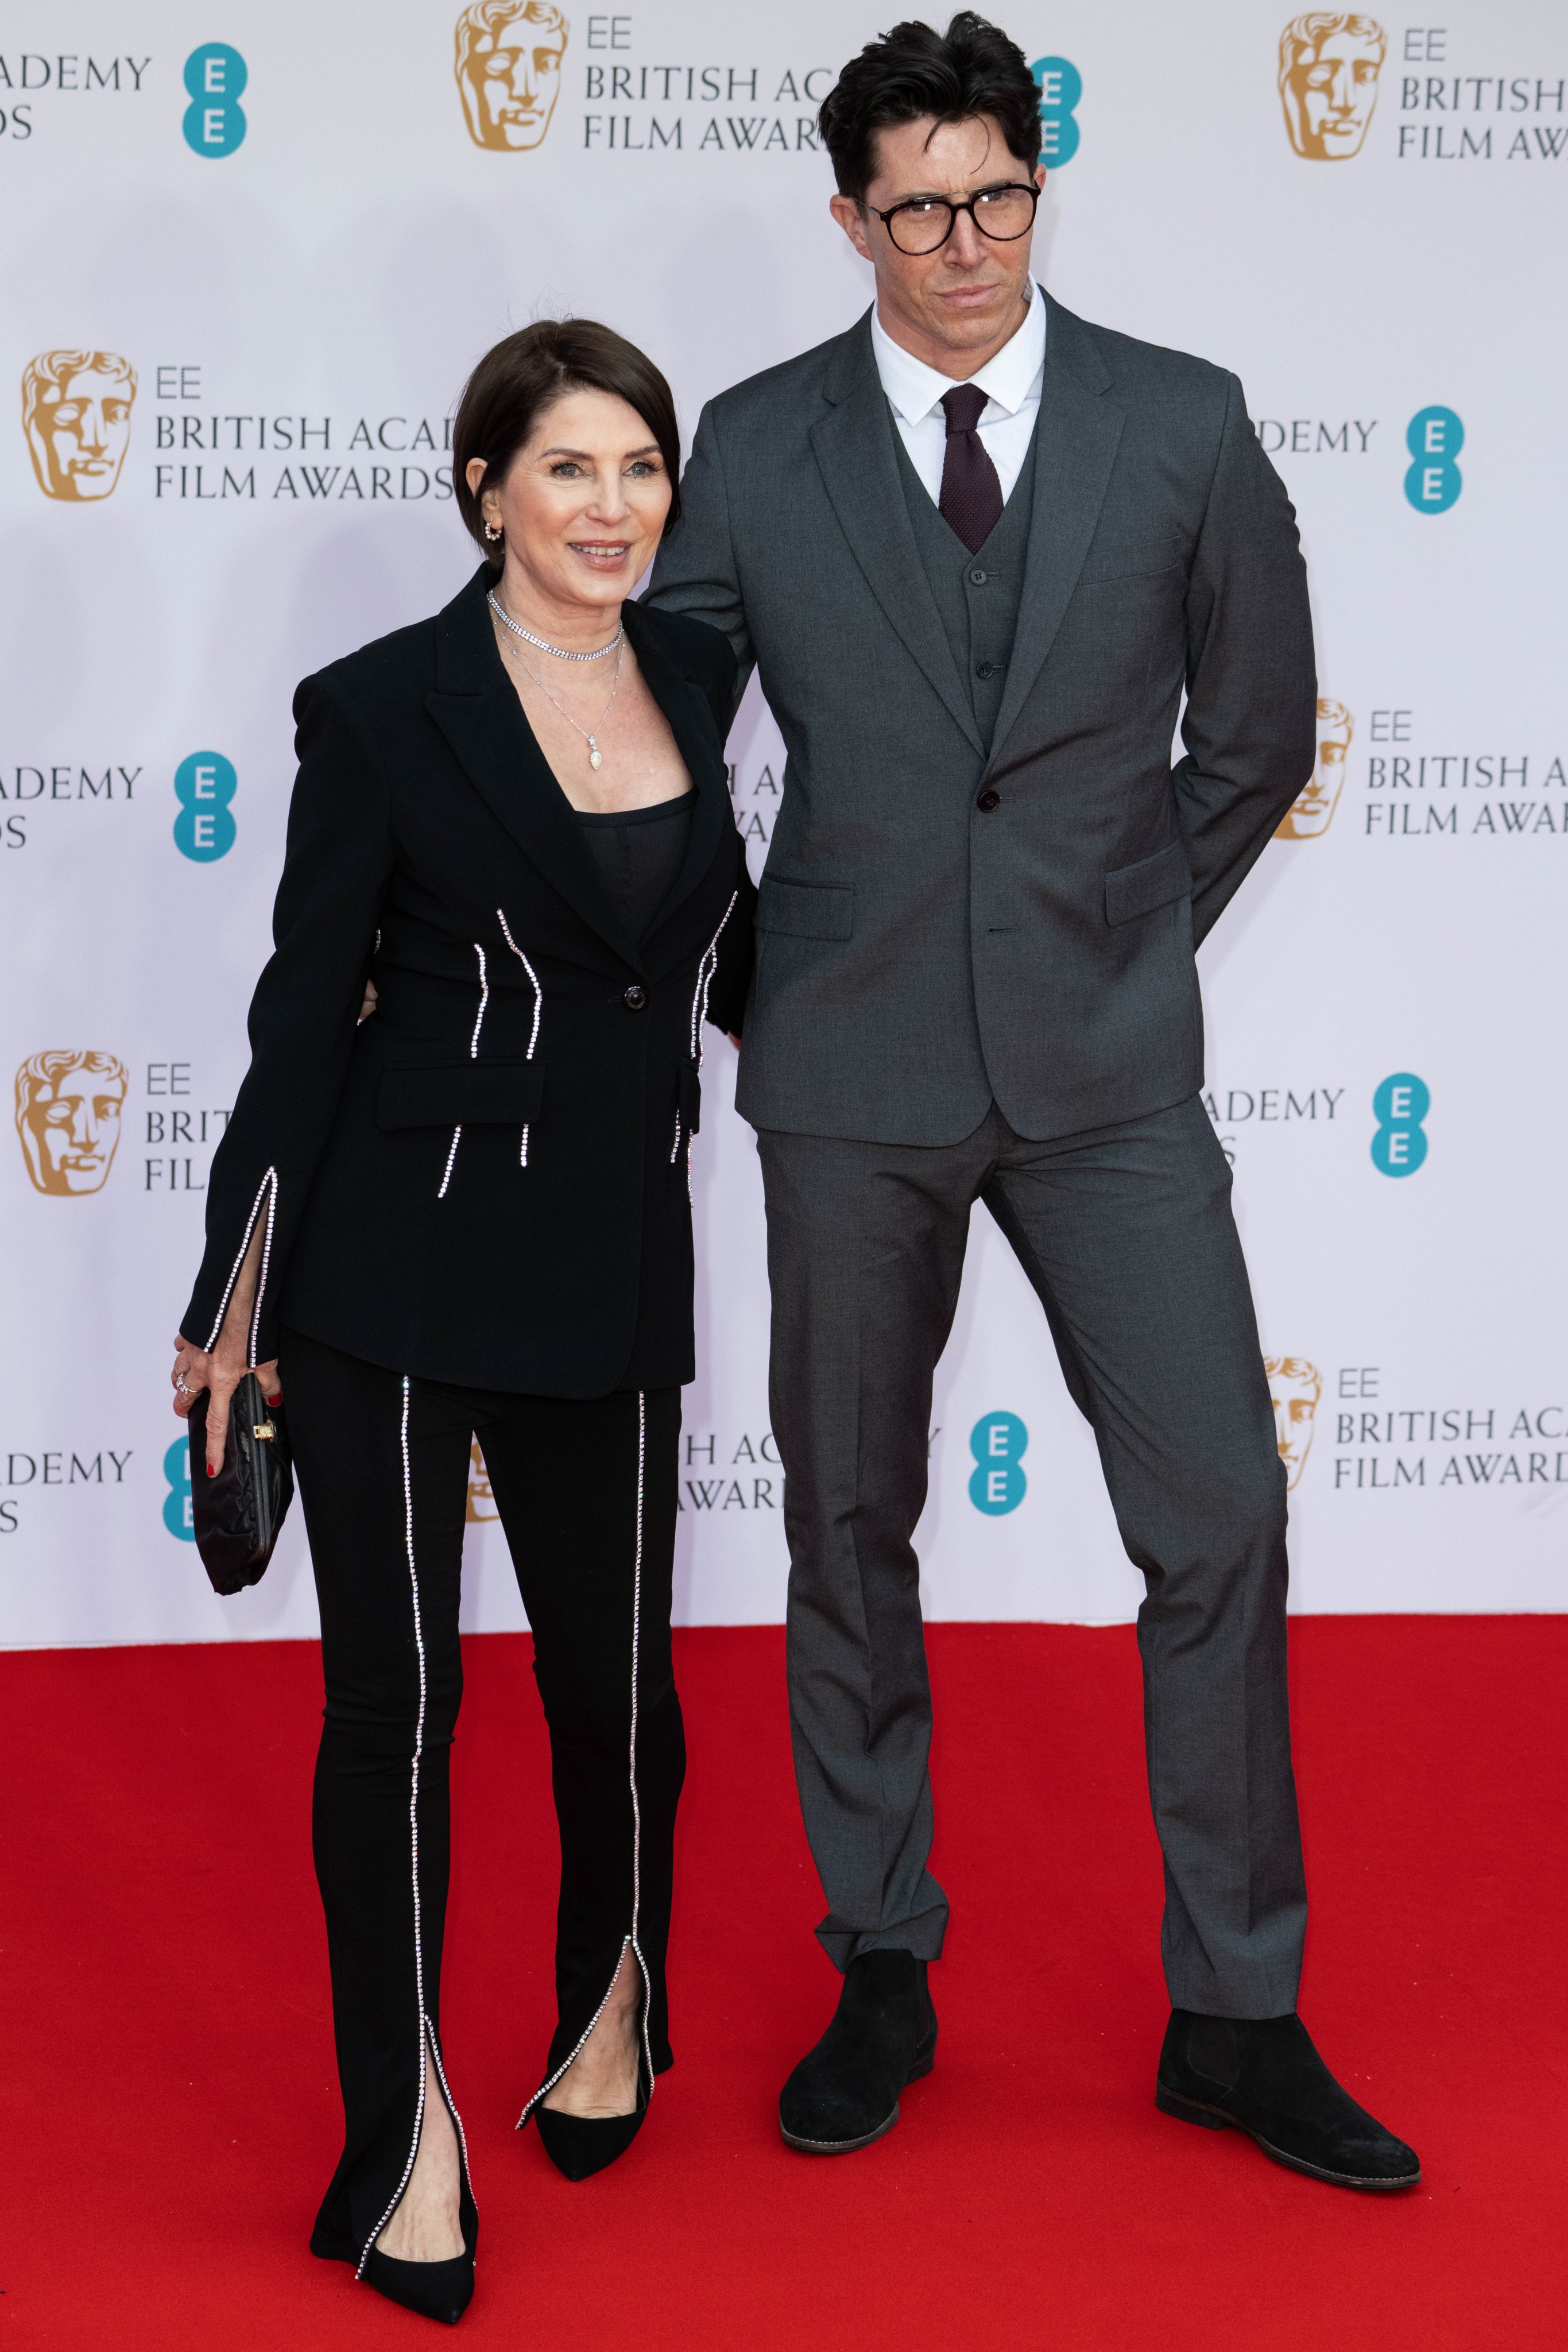 EE British Academy Film Awards 2022 - Red Carpet Arrivals